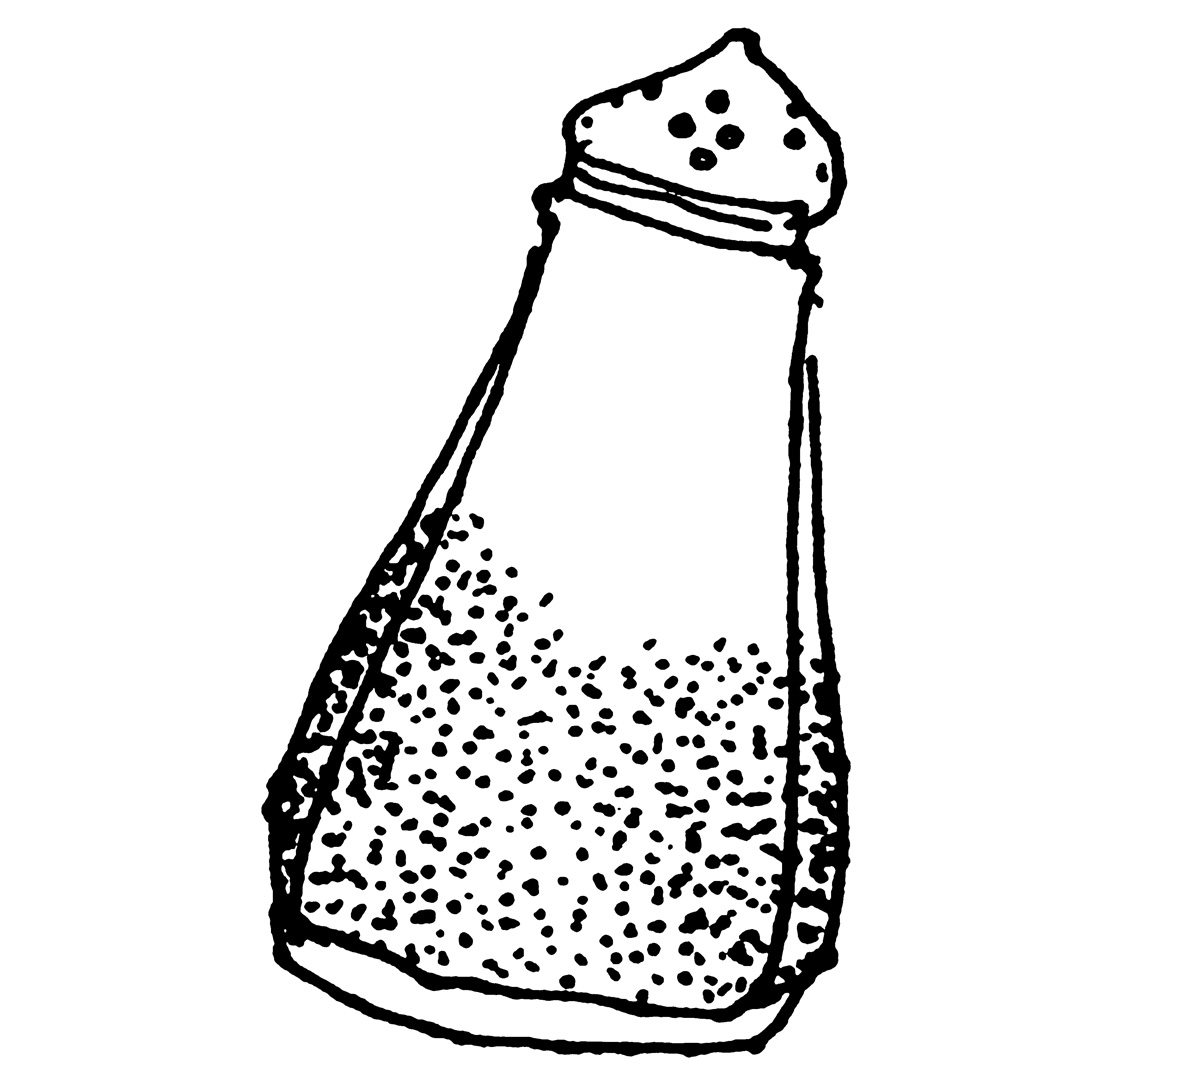 A drawing of a salt shaker.